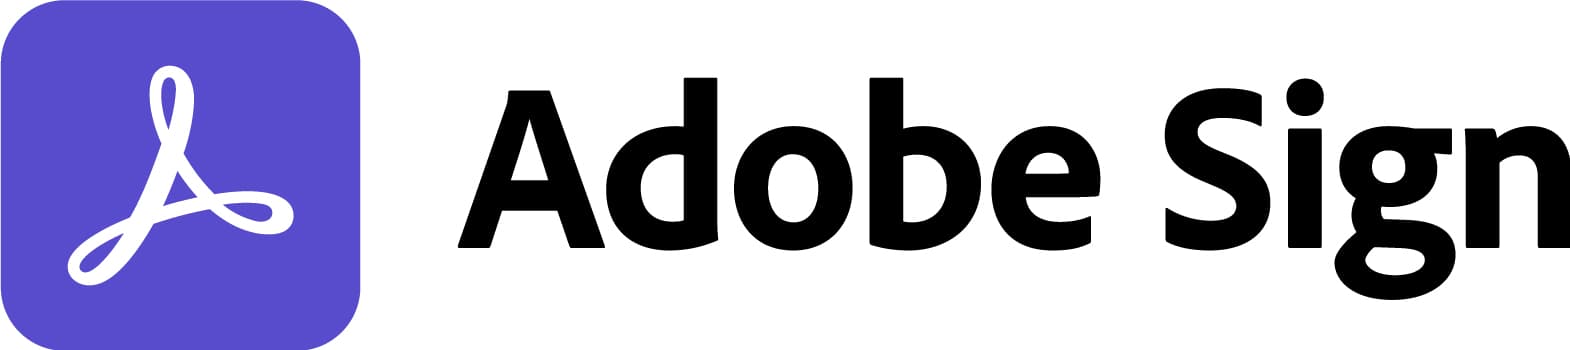 Adobe Acrobat Sign ロゴ